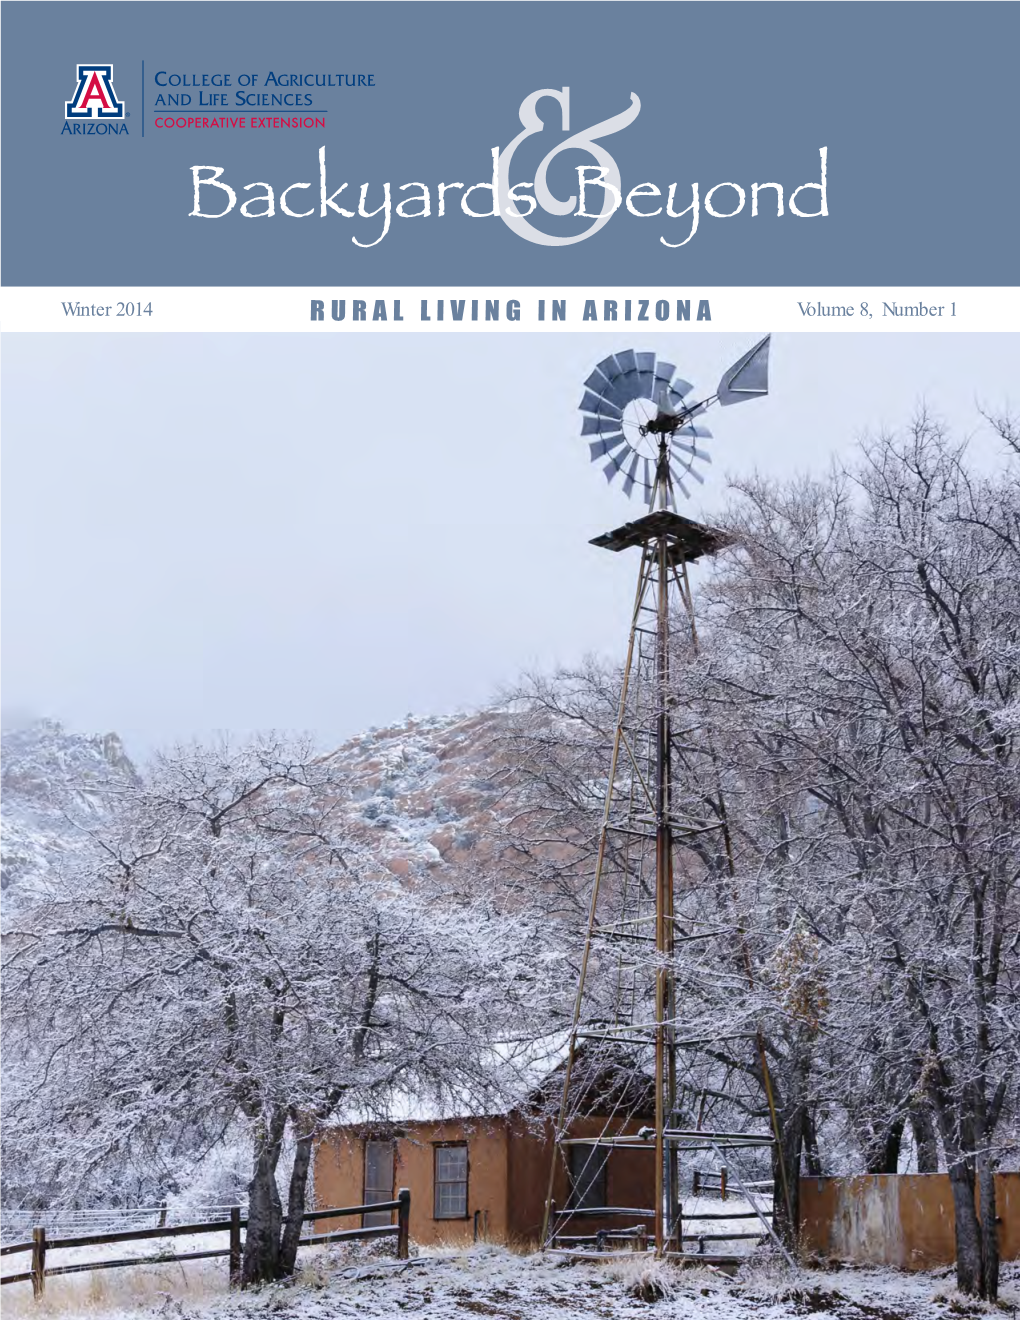 Backyards Beyond Rural Living& in Arizona Winter 2014 Volume 8 Number 1